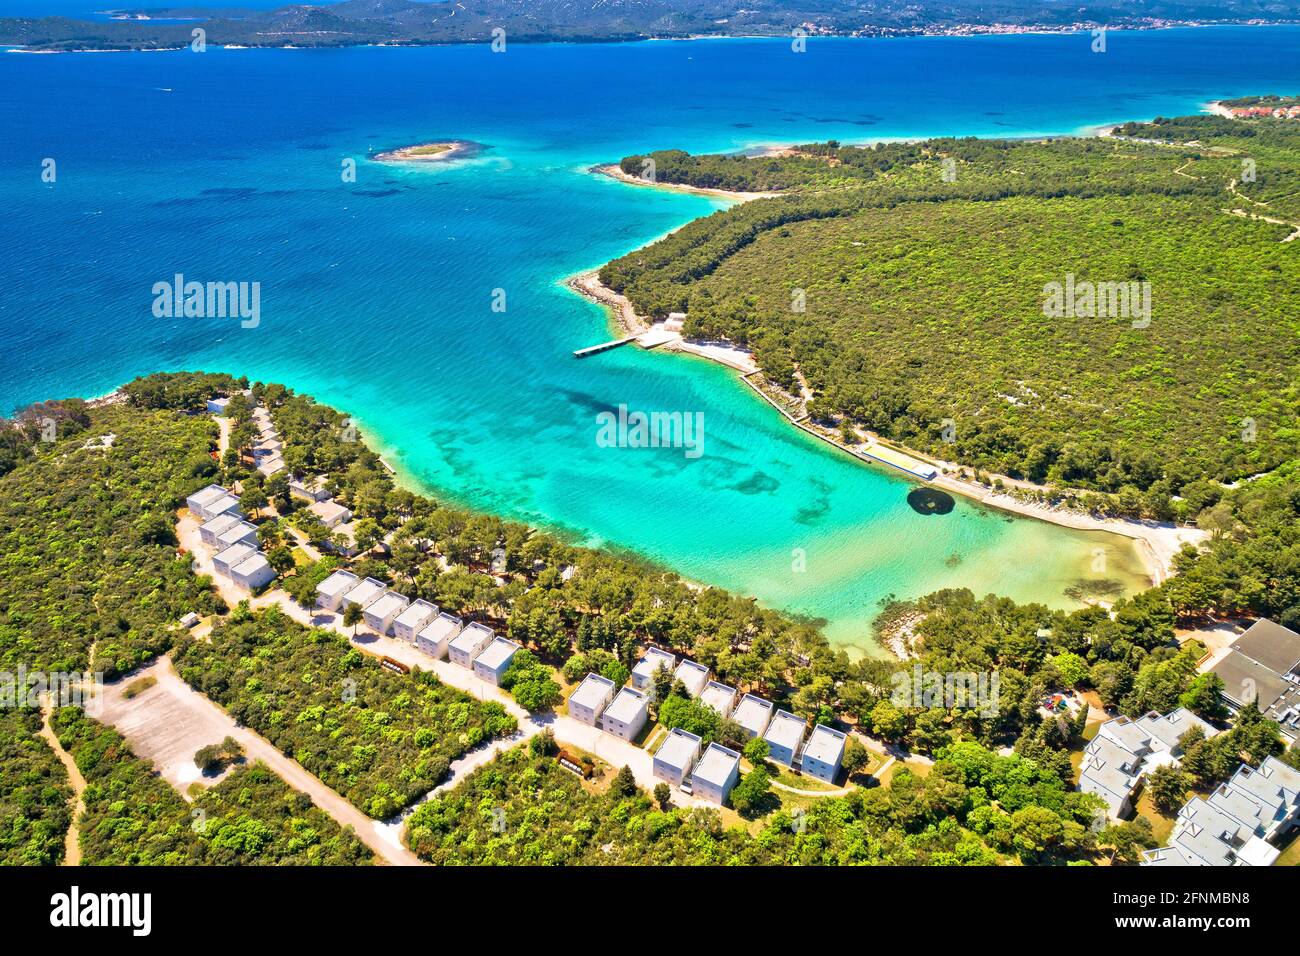 Crvena Luka turquoise beach and Vransko lake aerial view, Dalmatia region of Croatia Stock Photo